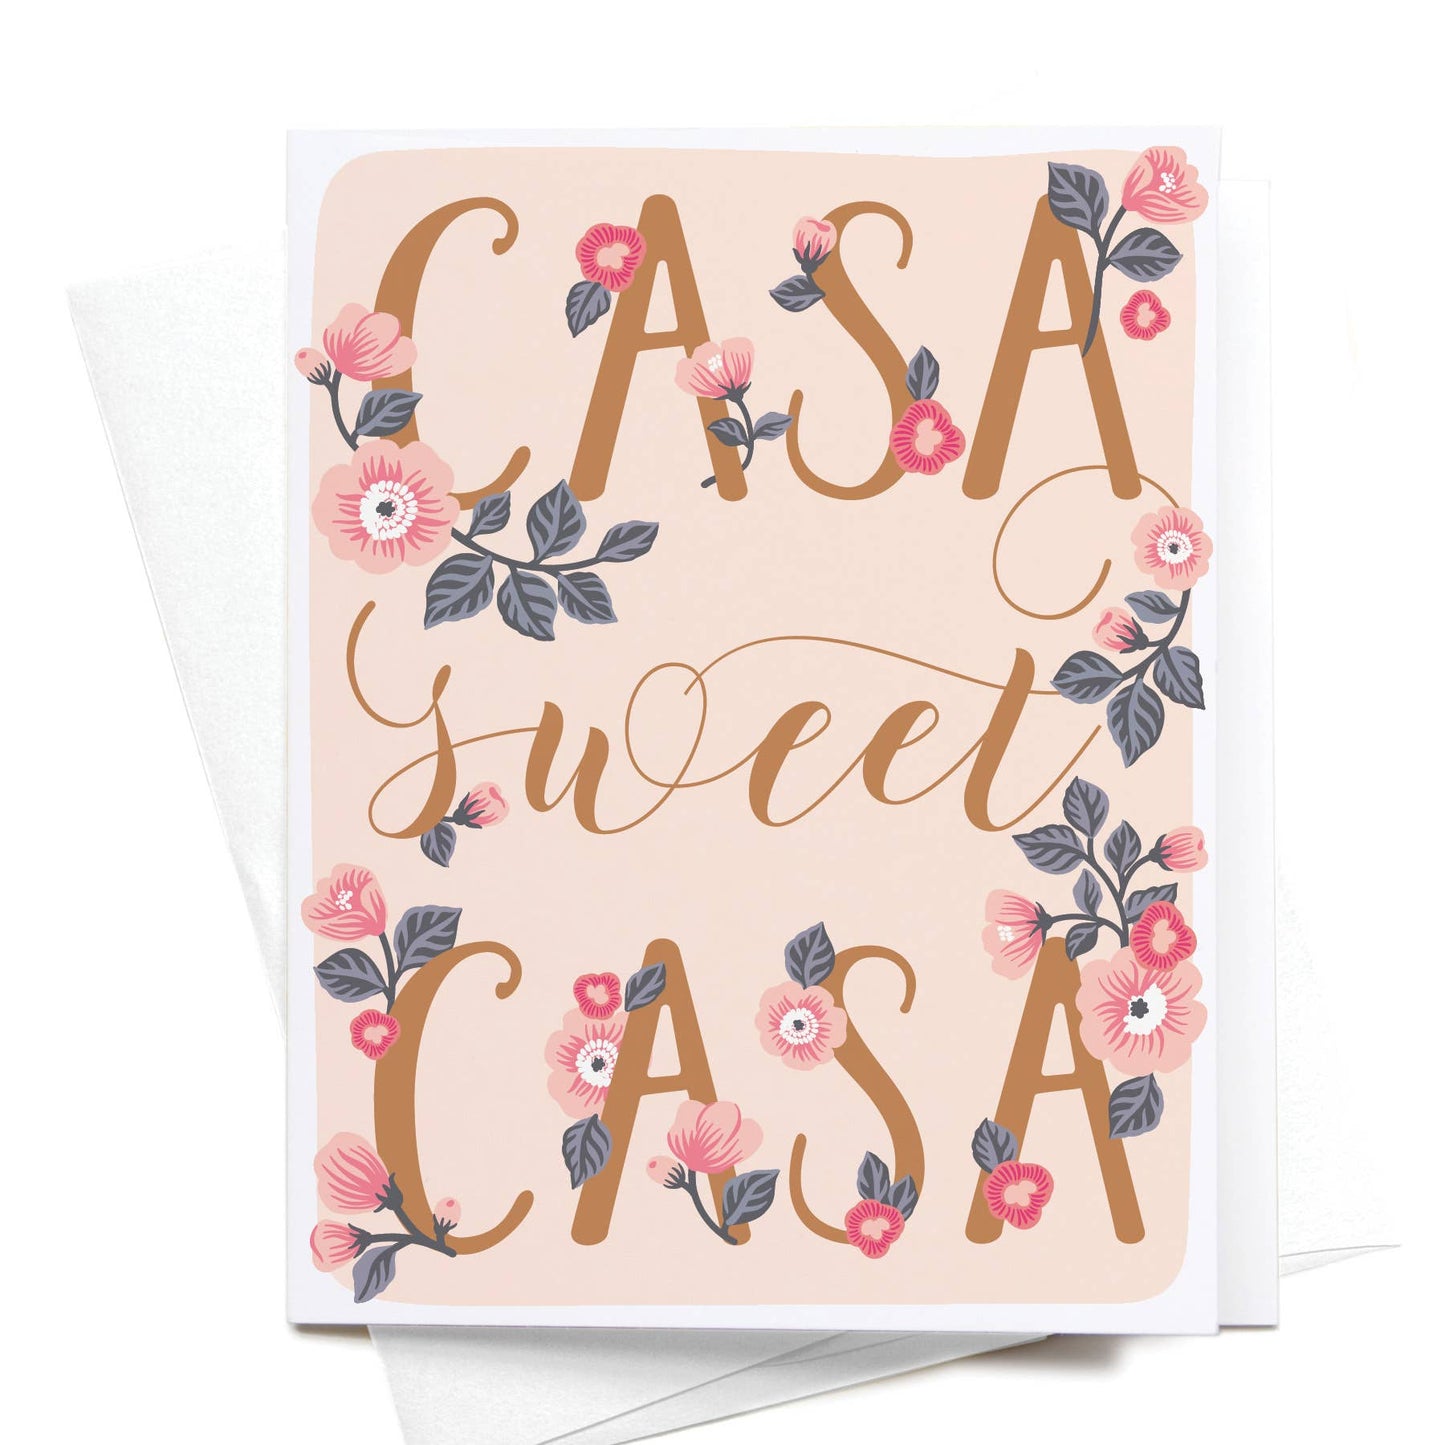 "Casa Sweet Casa" Greeting Card